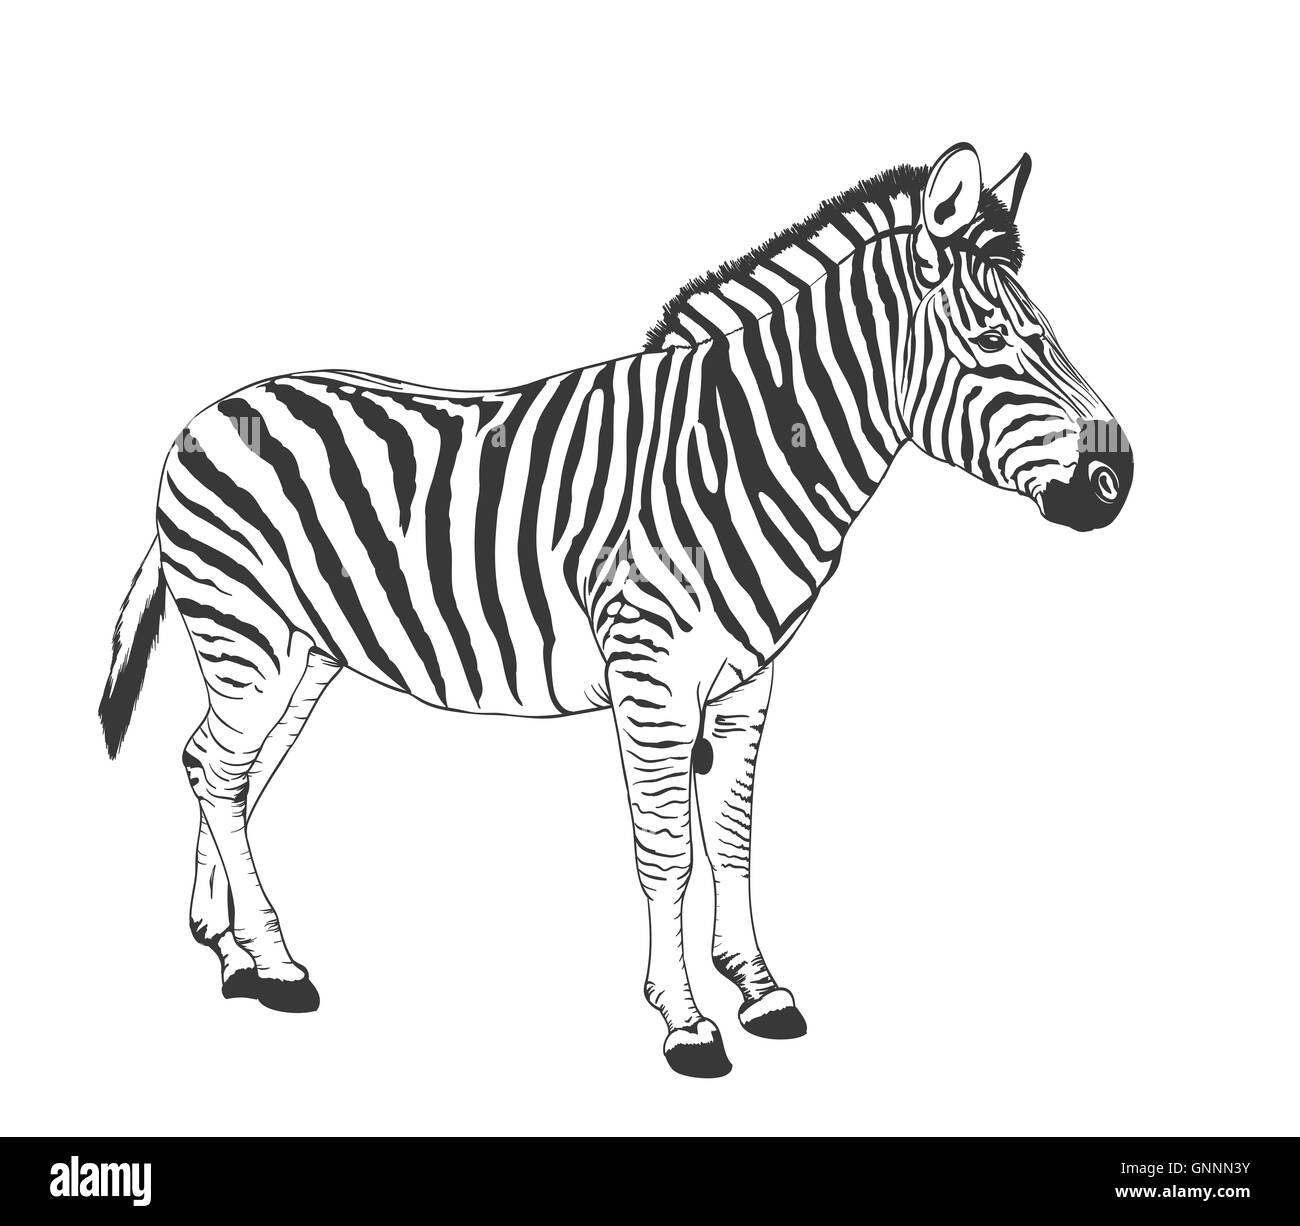 zebra silhouette drawing Stock Photo